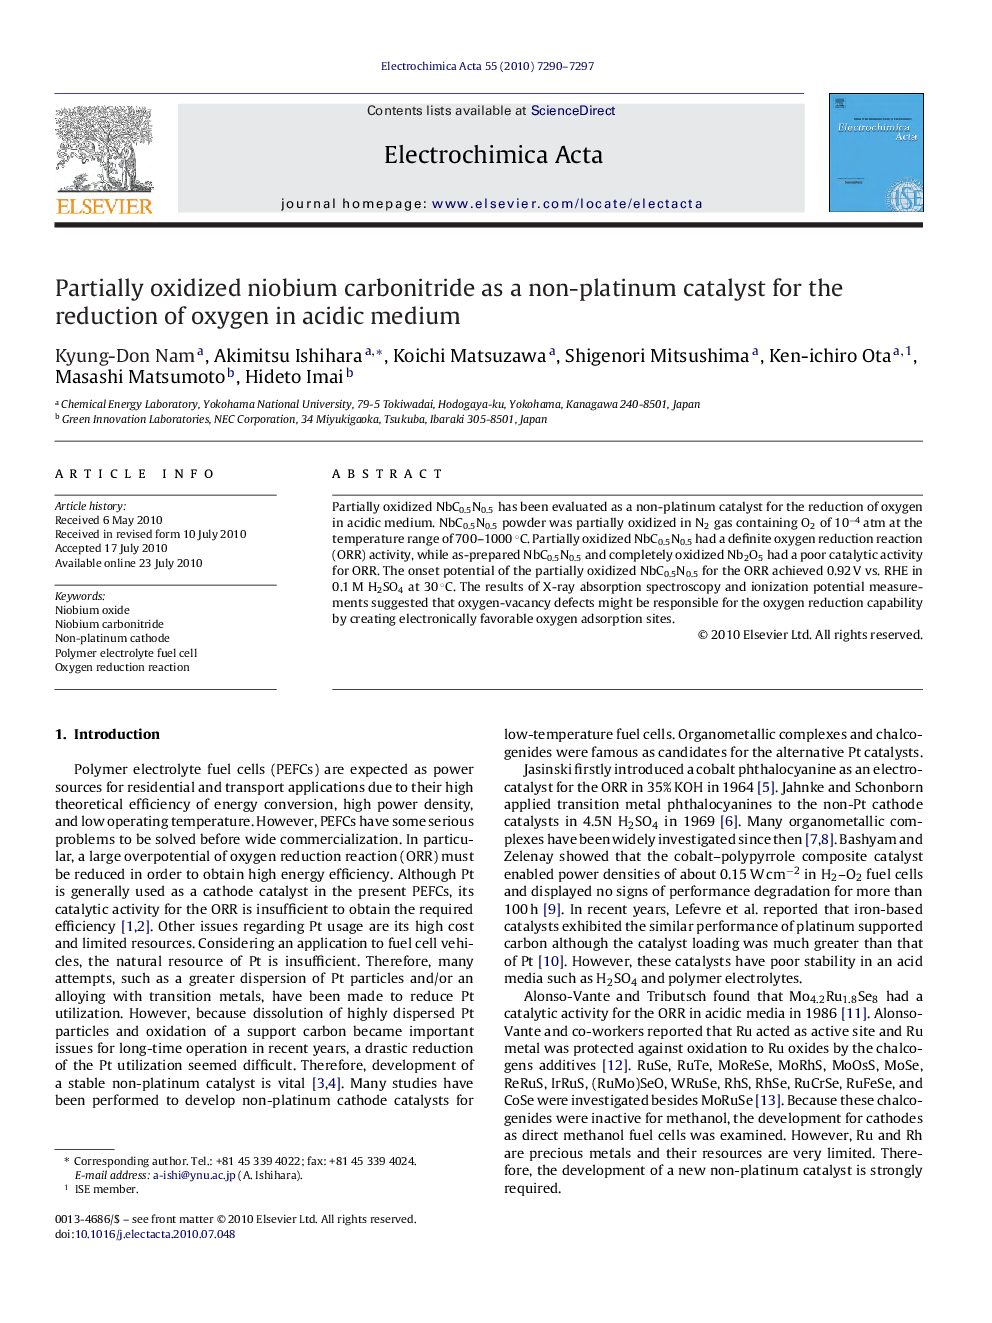 Partially oxidized niobium carbonitride as a non-platinum catalyst for the reduction of oxygen in acidic medium